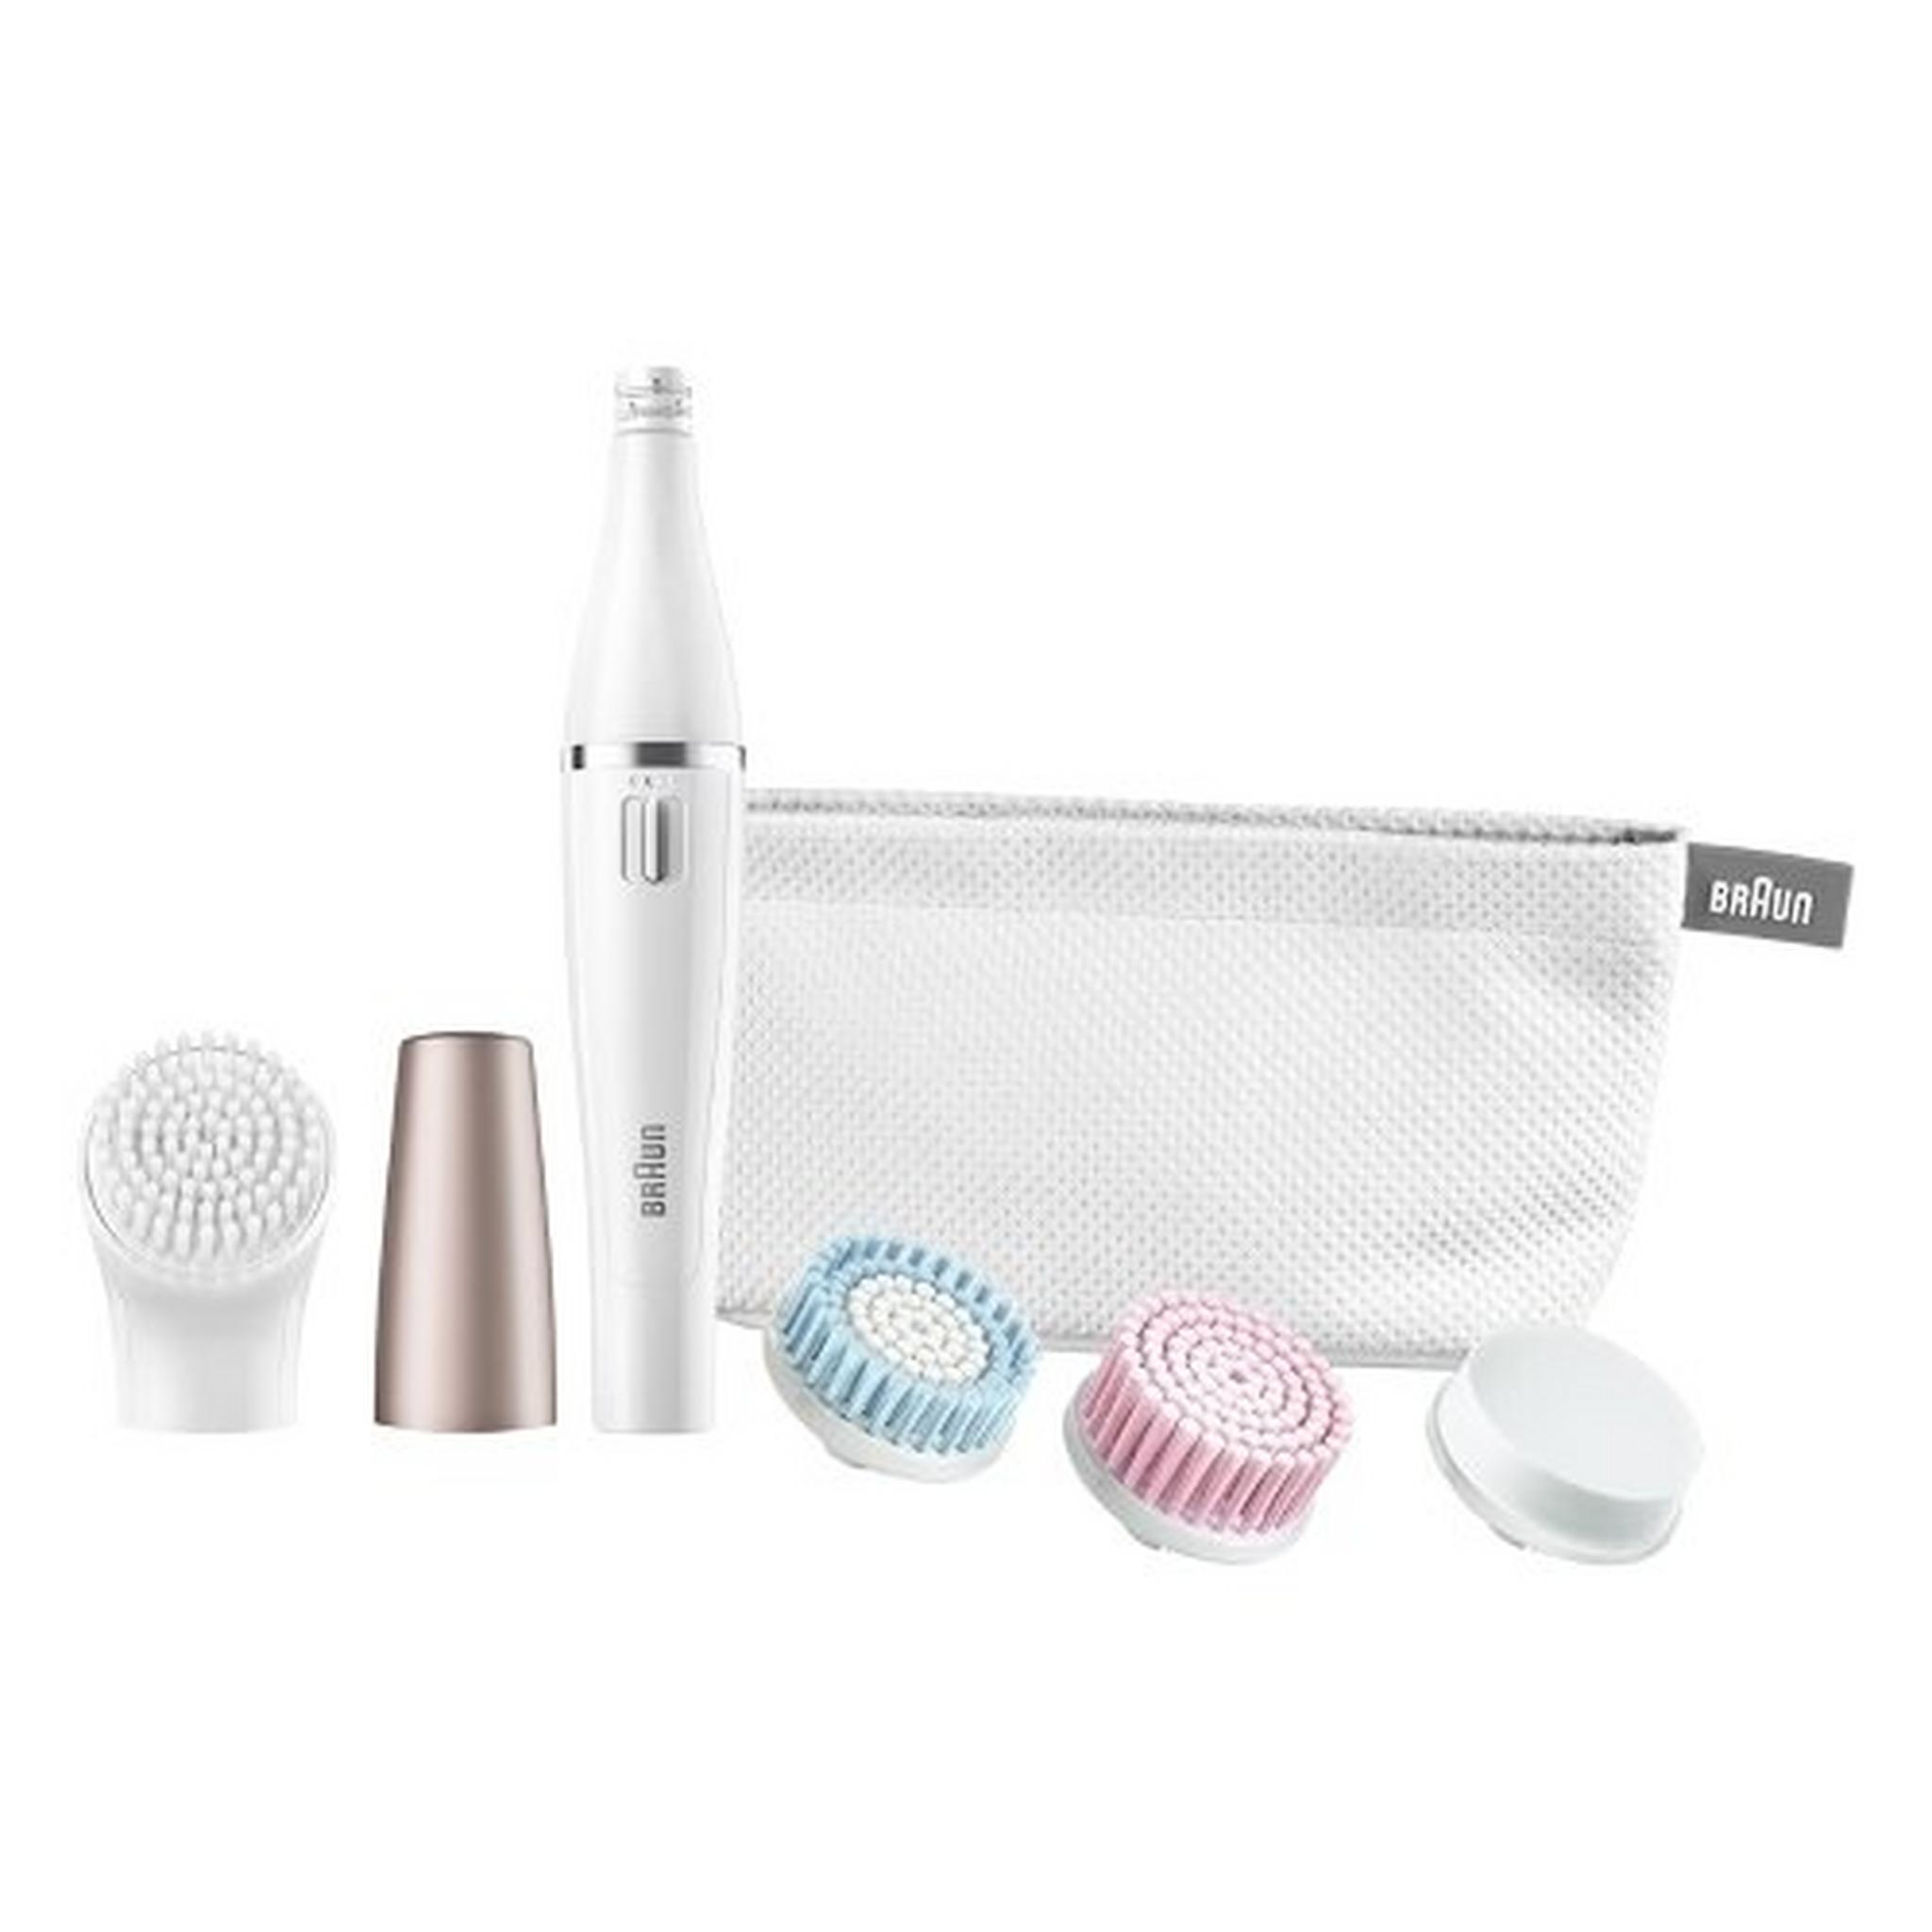 Braun Face SPA Sensitive Beauty Wet & Dry Cleansing Brush + Mini Epilator